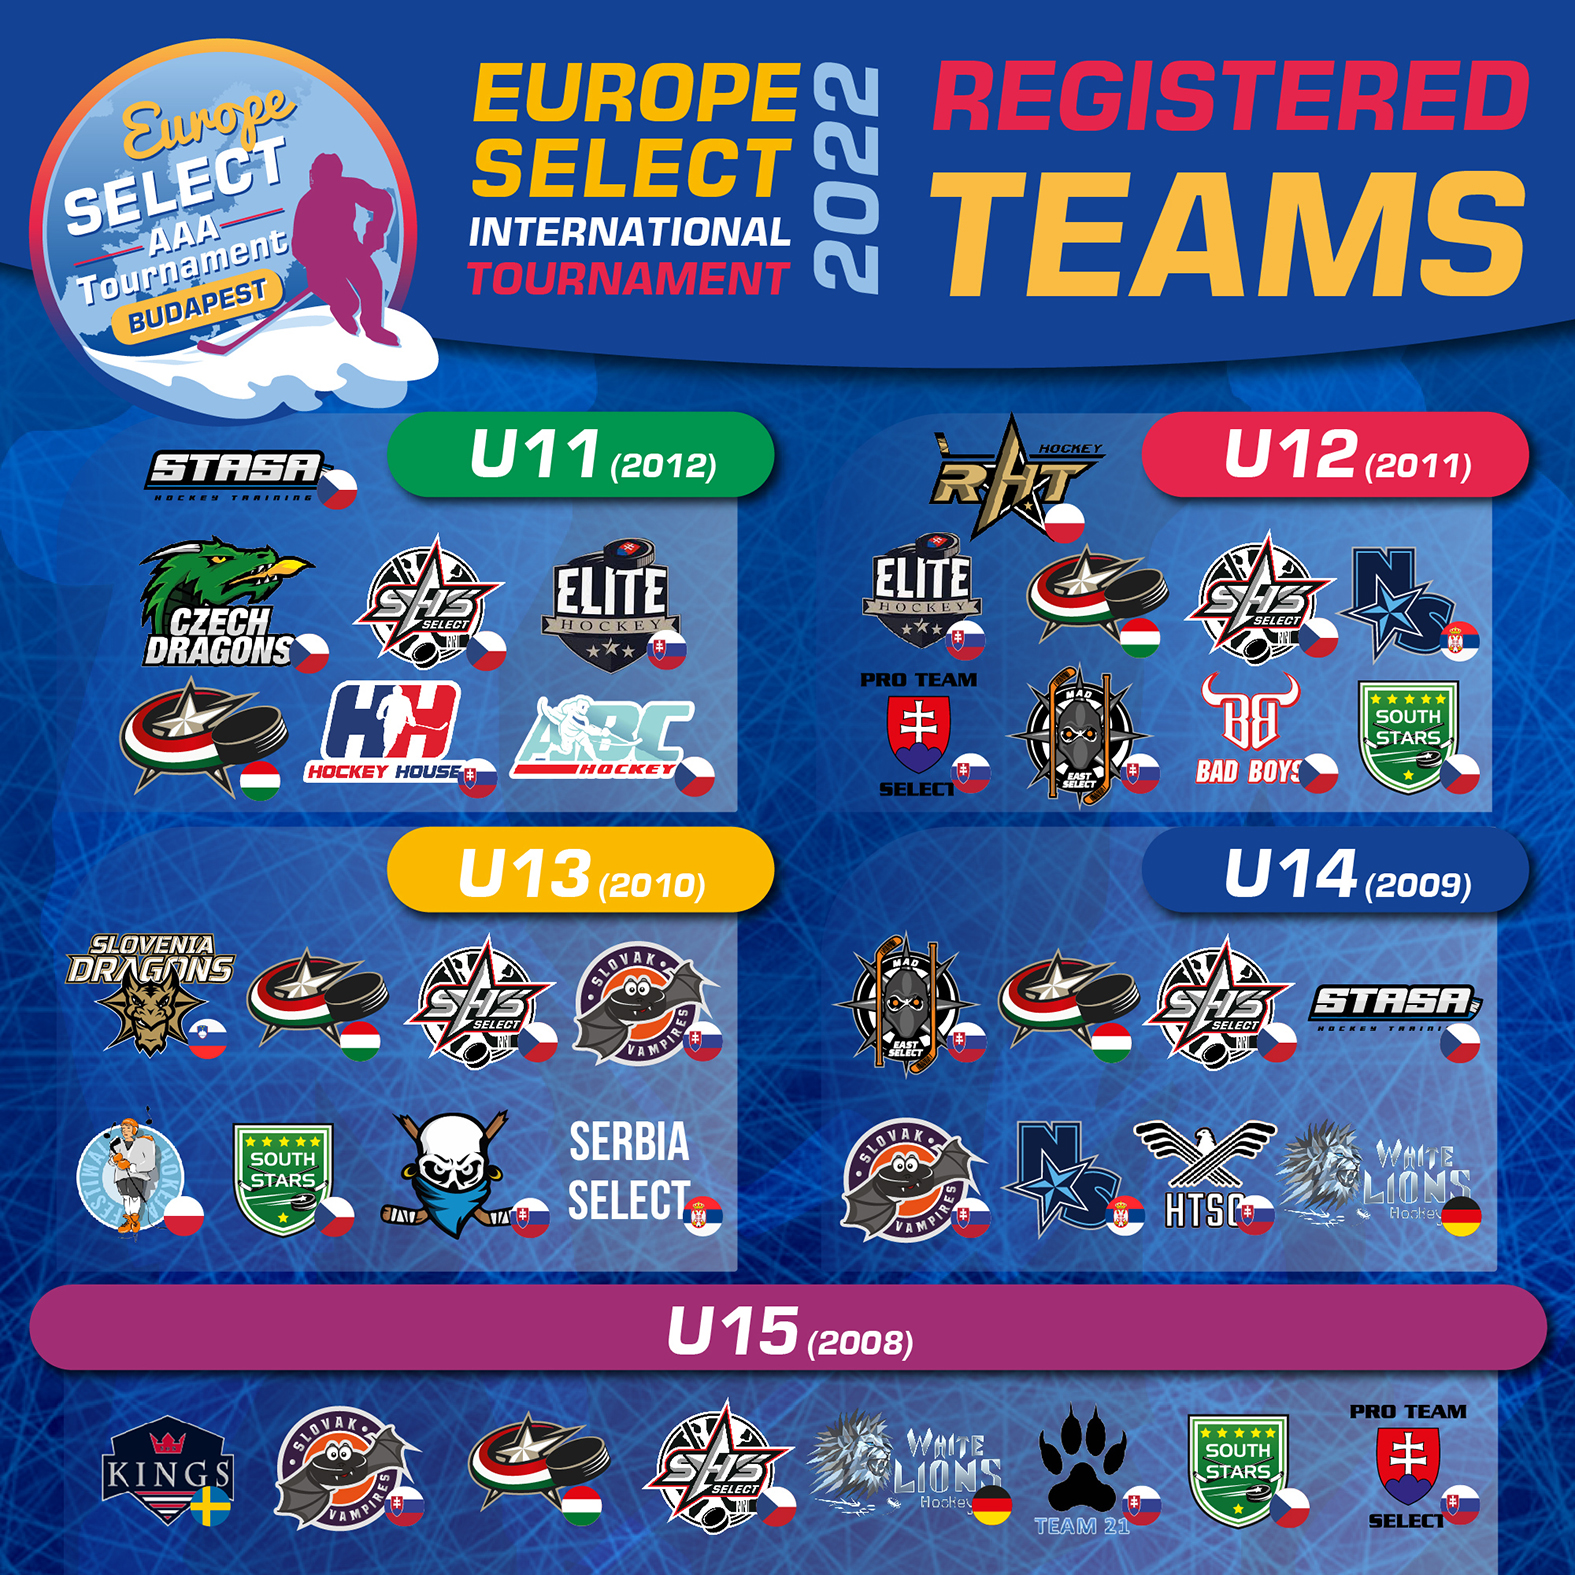 Végleges a Europe Select Tournament programja